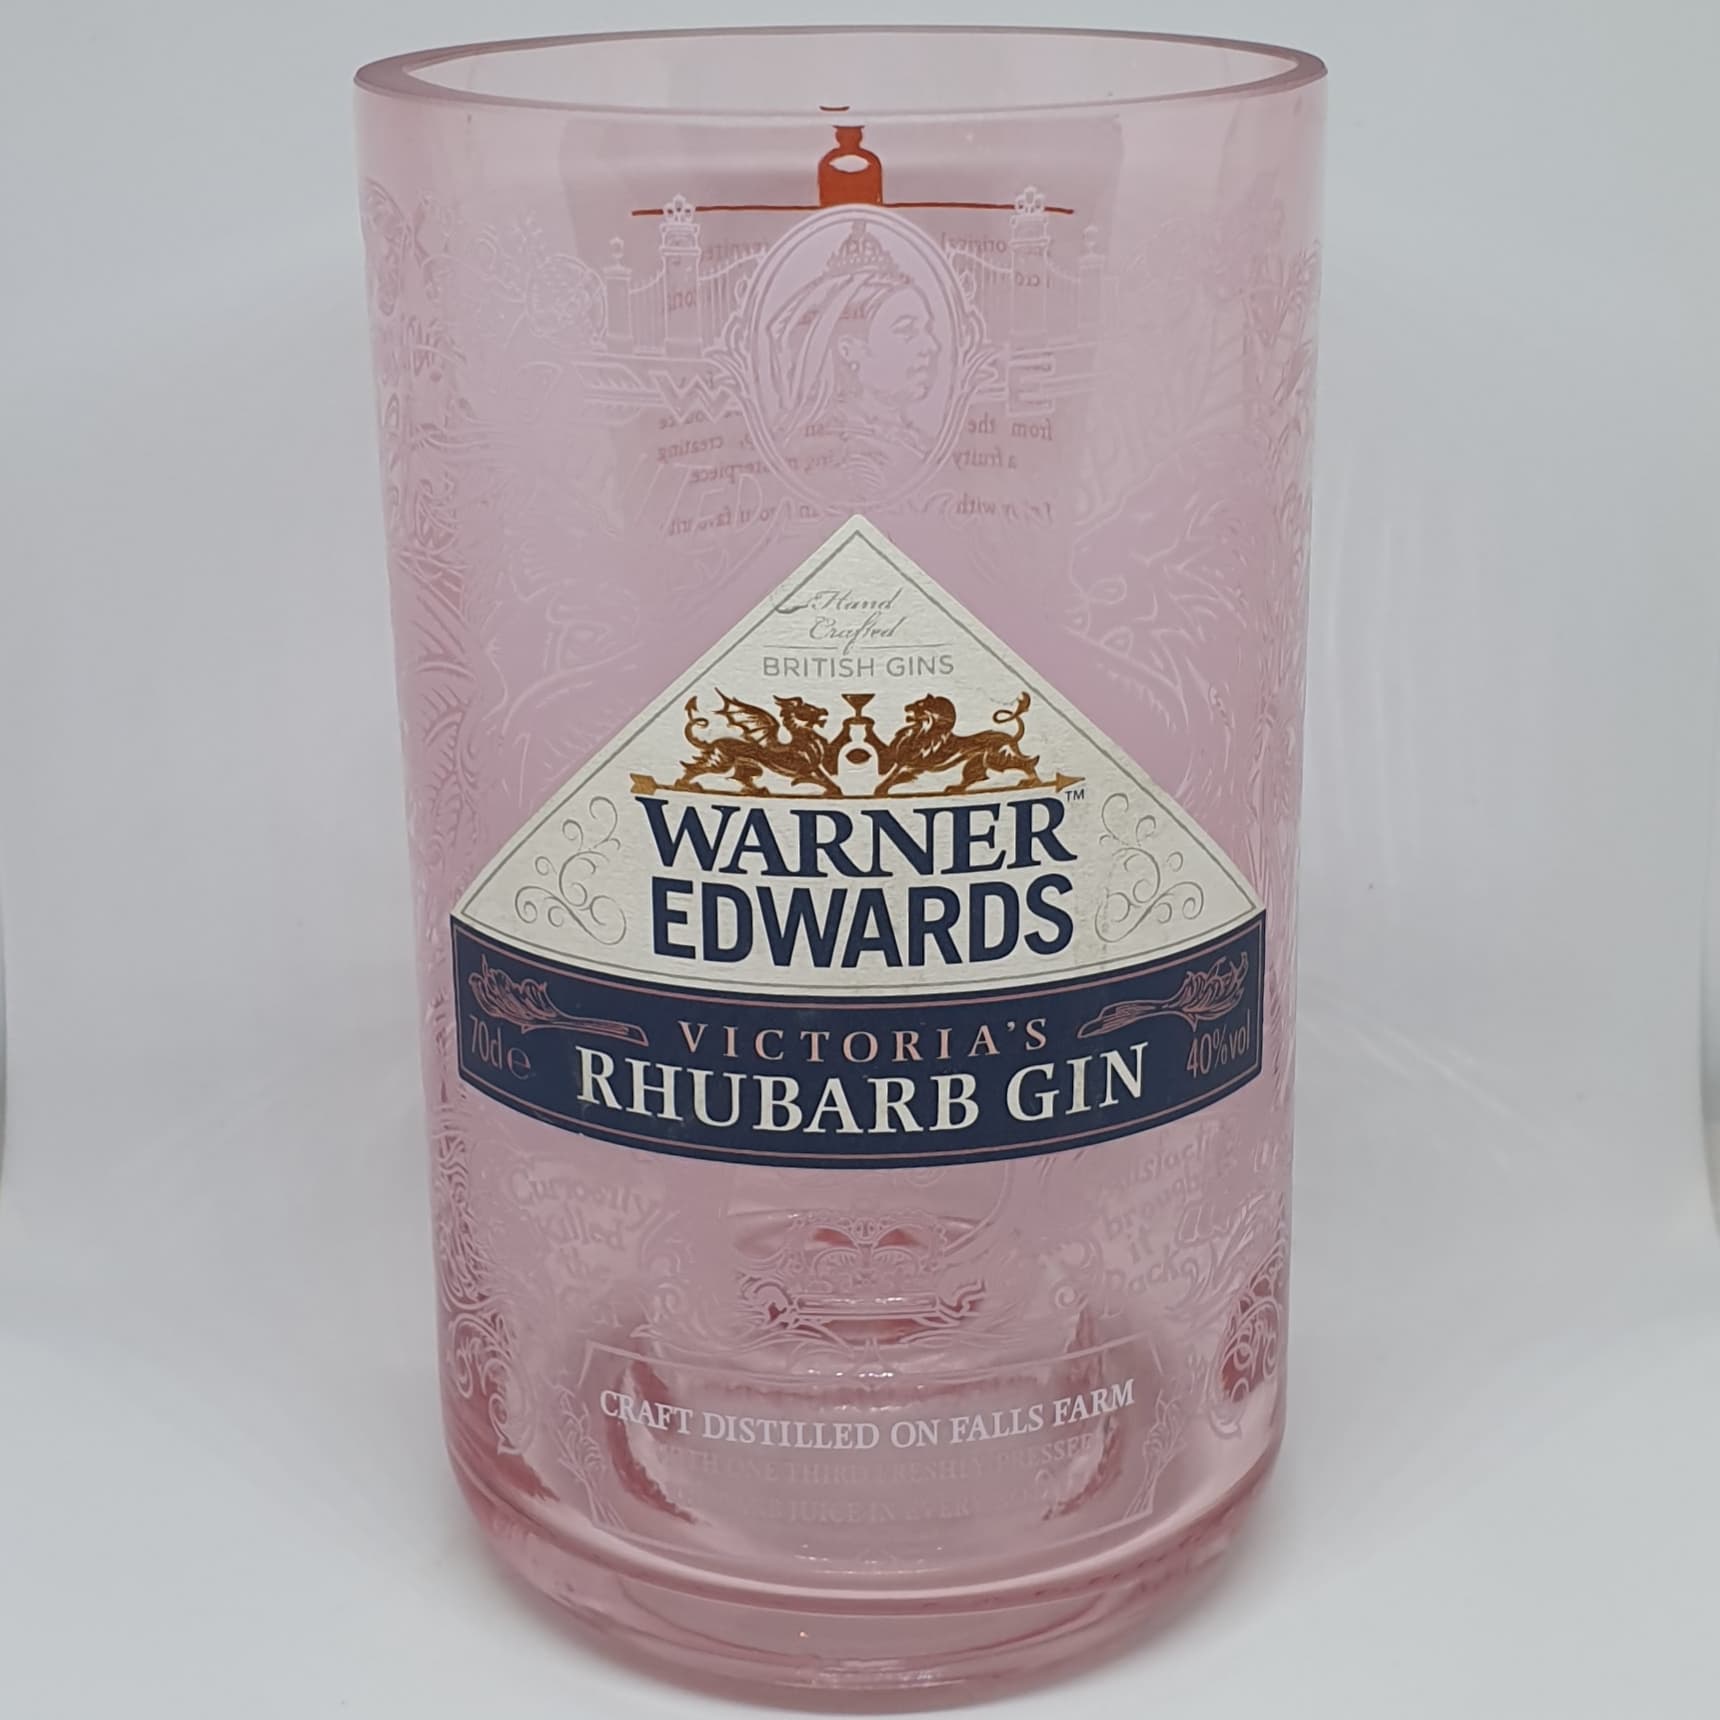 Warner Edwards Rhubarb Gin Bottle Candle